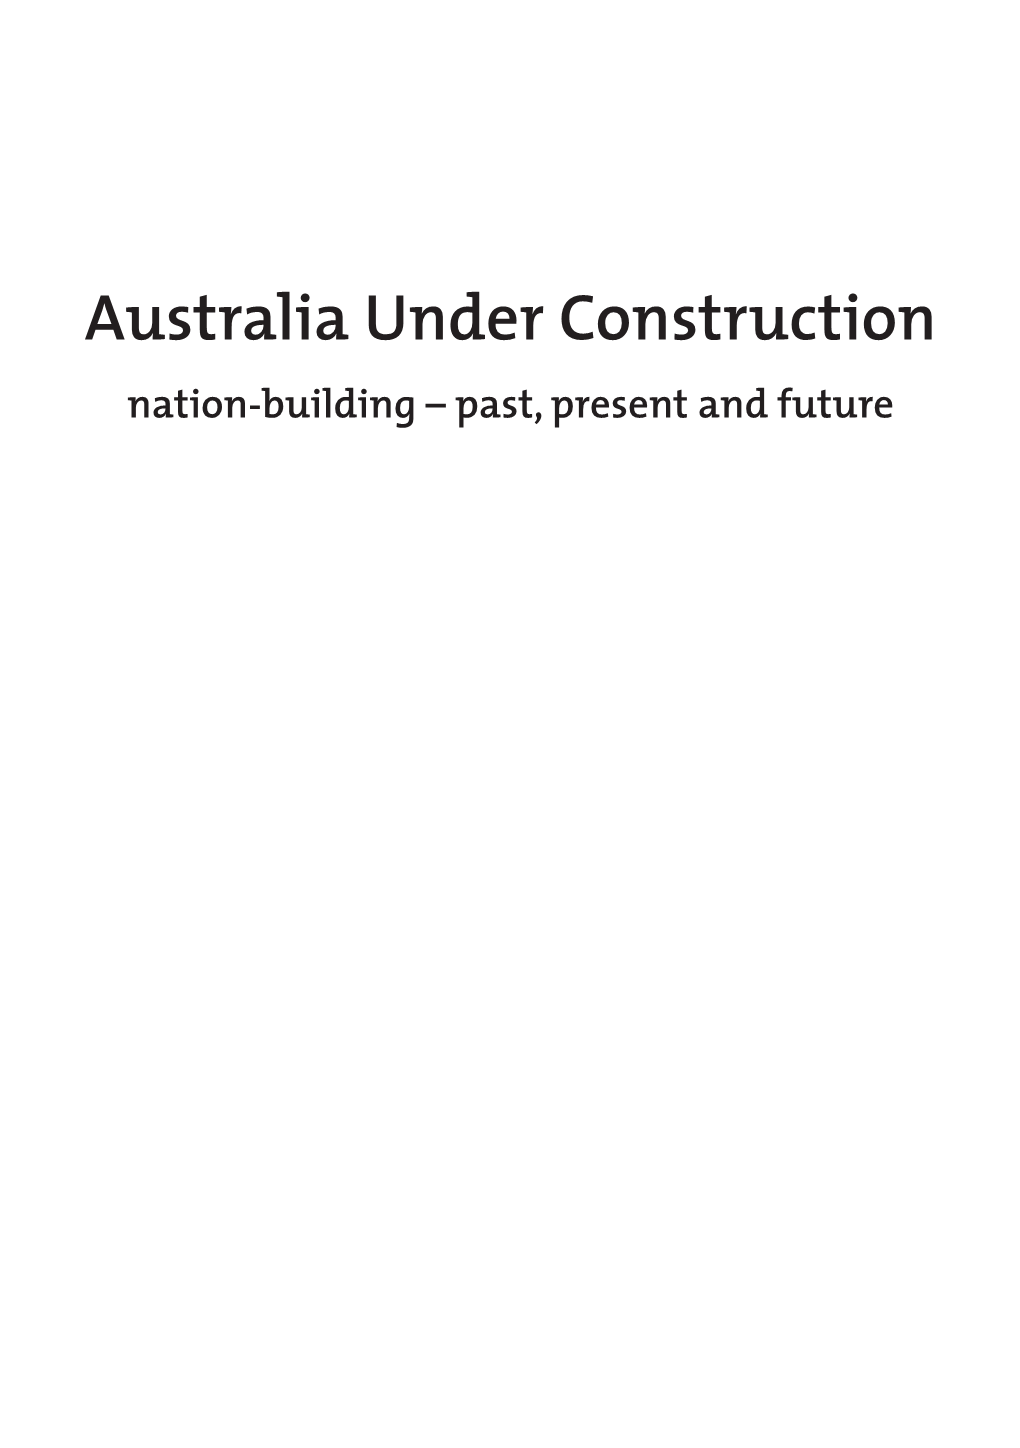 Australia Under Construction Nation-Building – Past, Present and Future